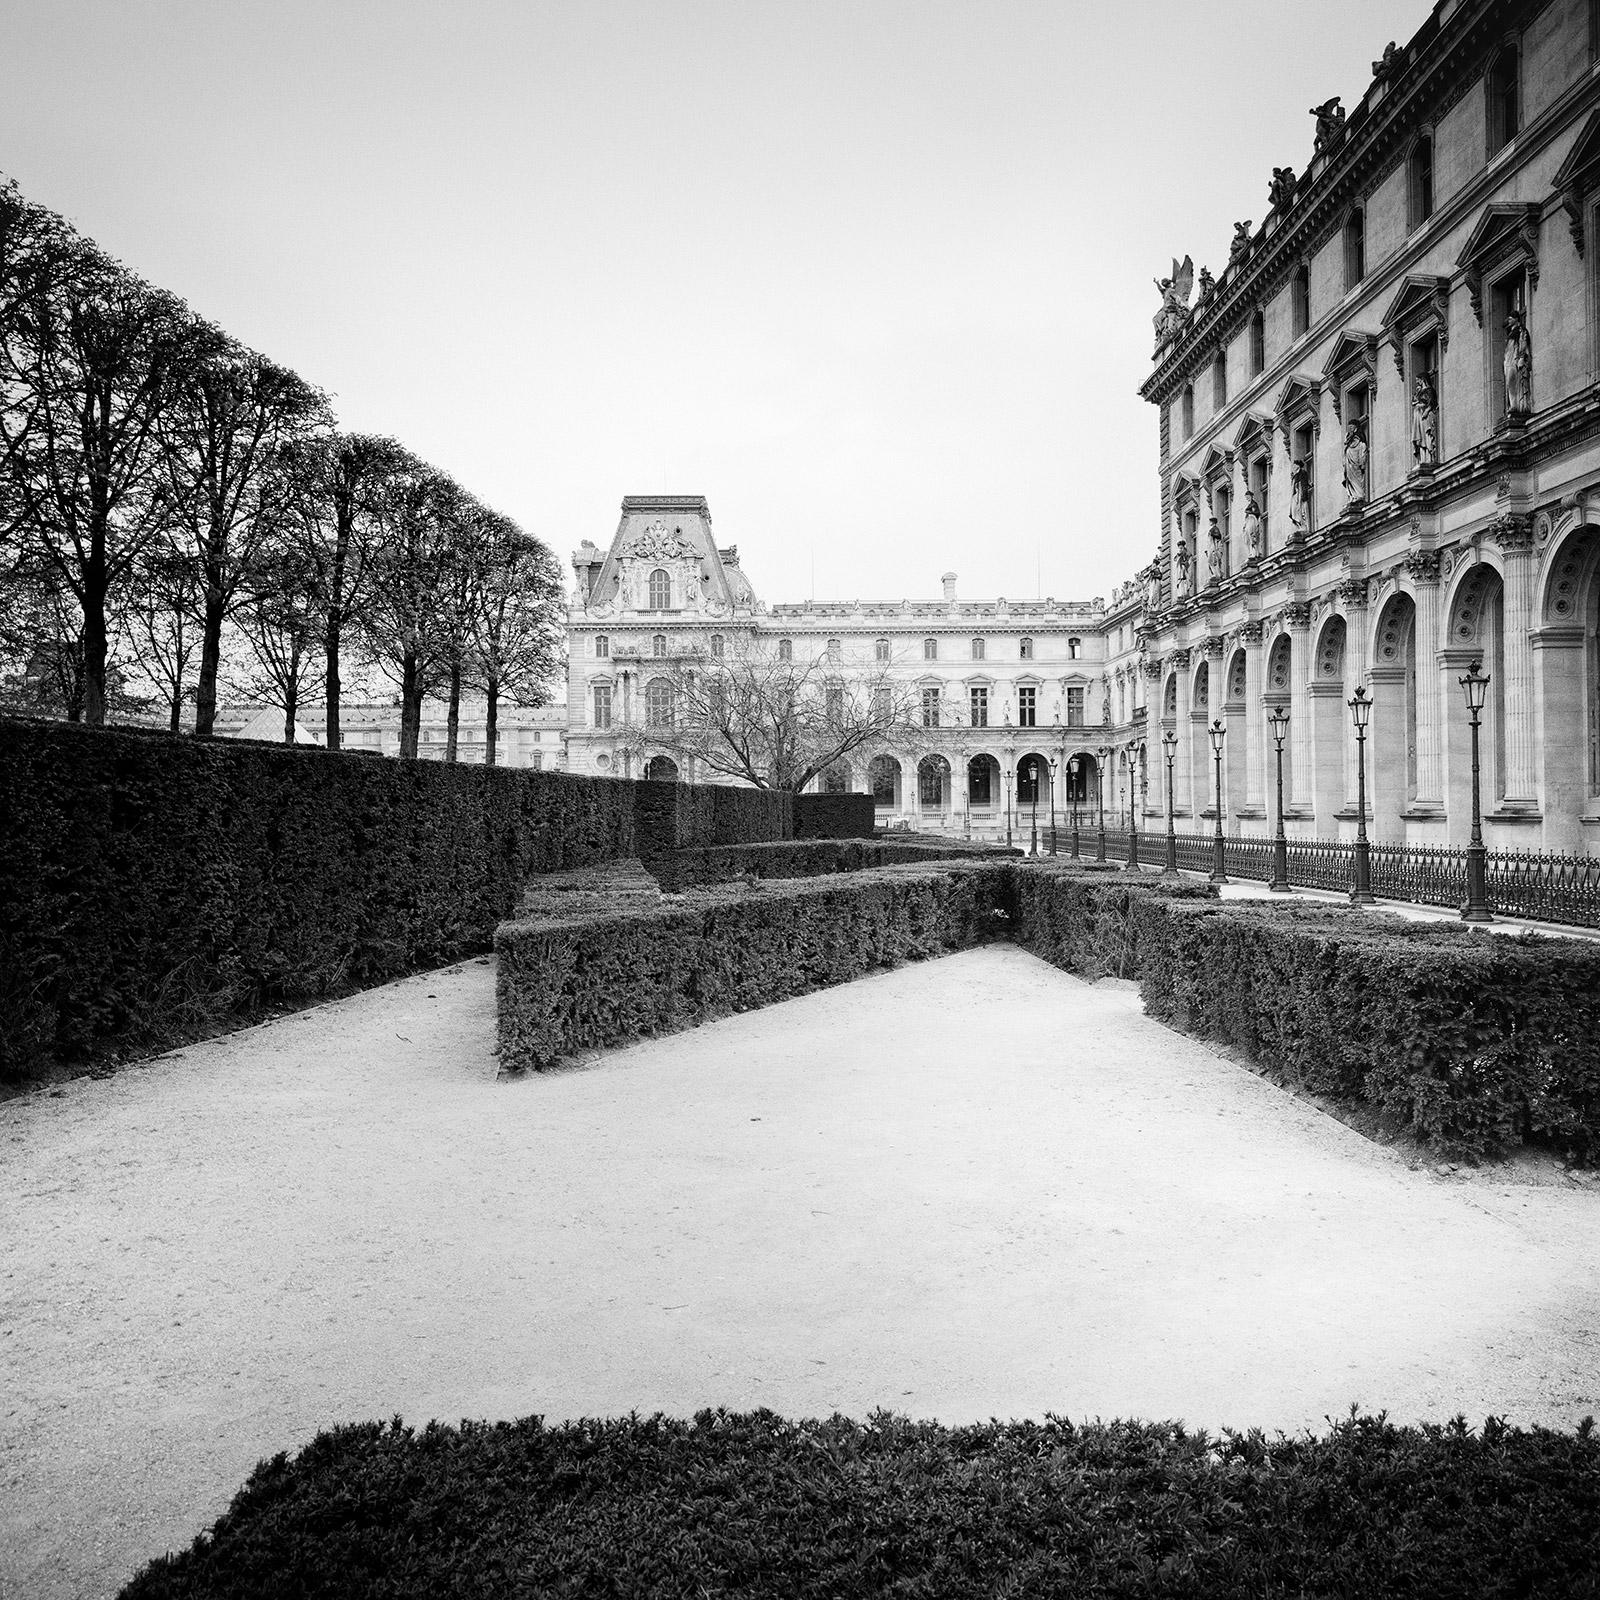 Louvre, Tree Avenue, Paris, France, black and white photography, cityscape